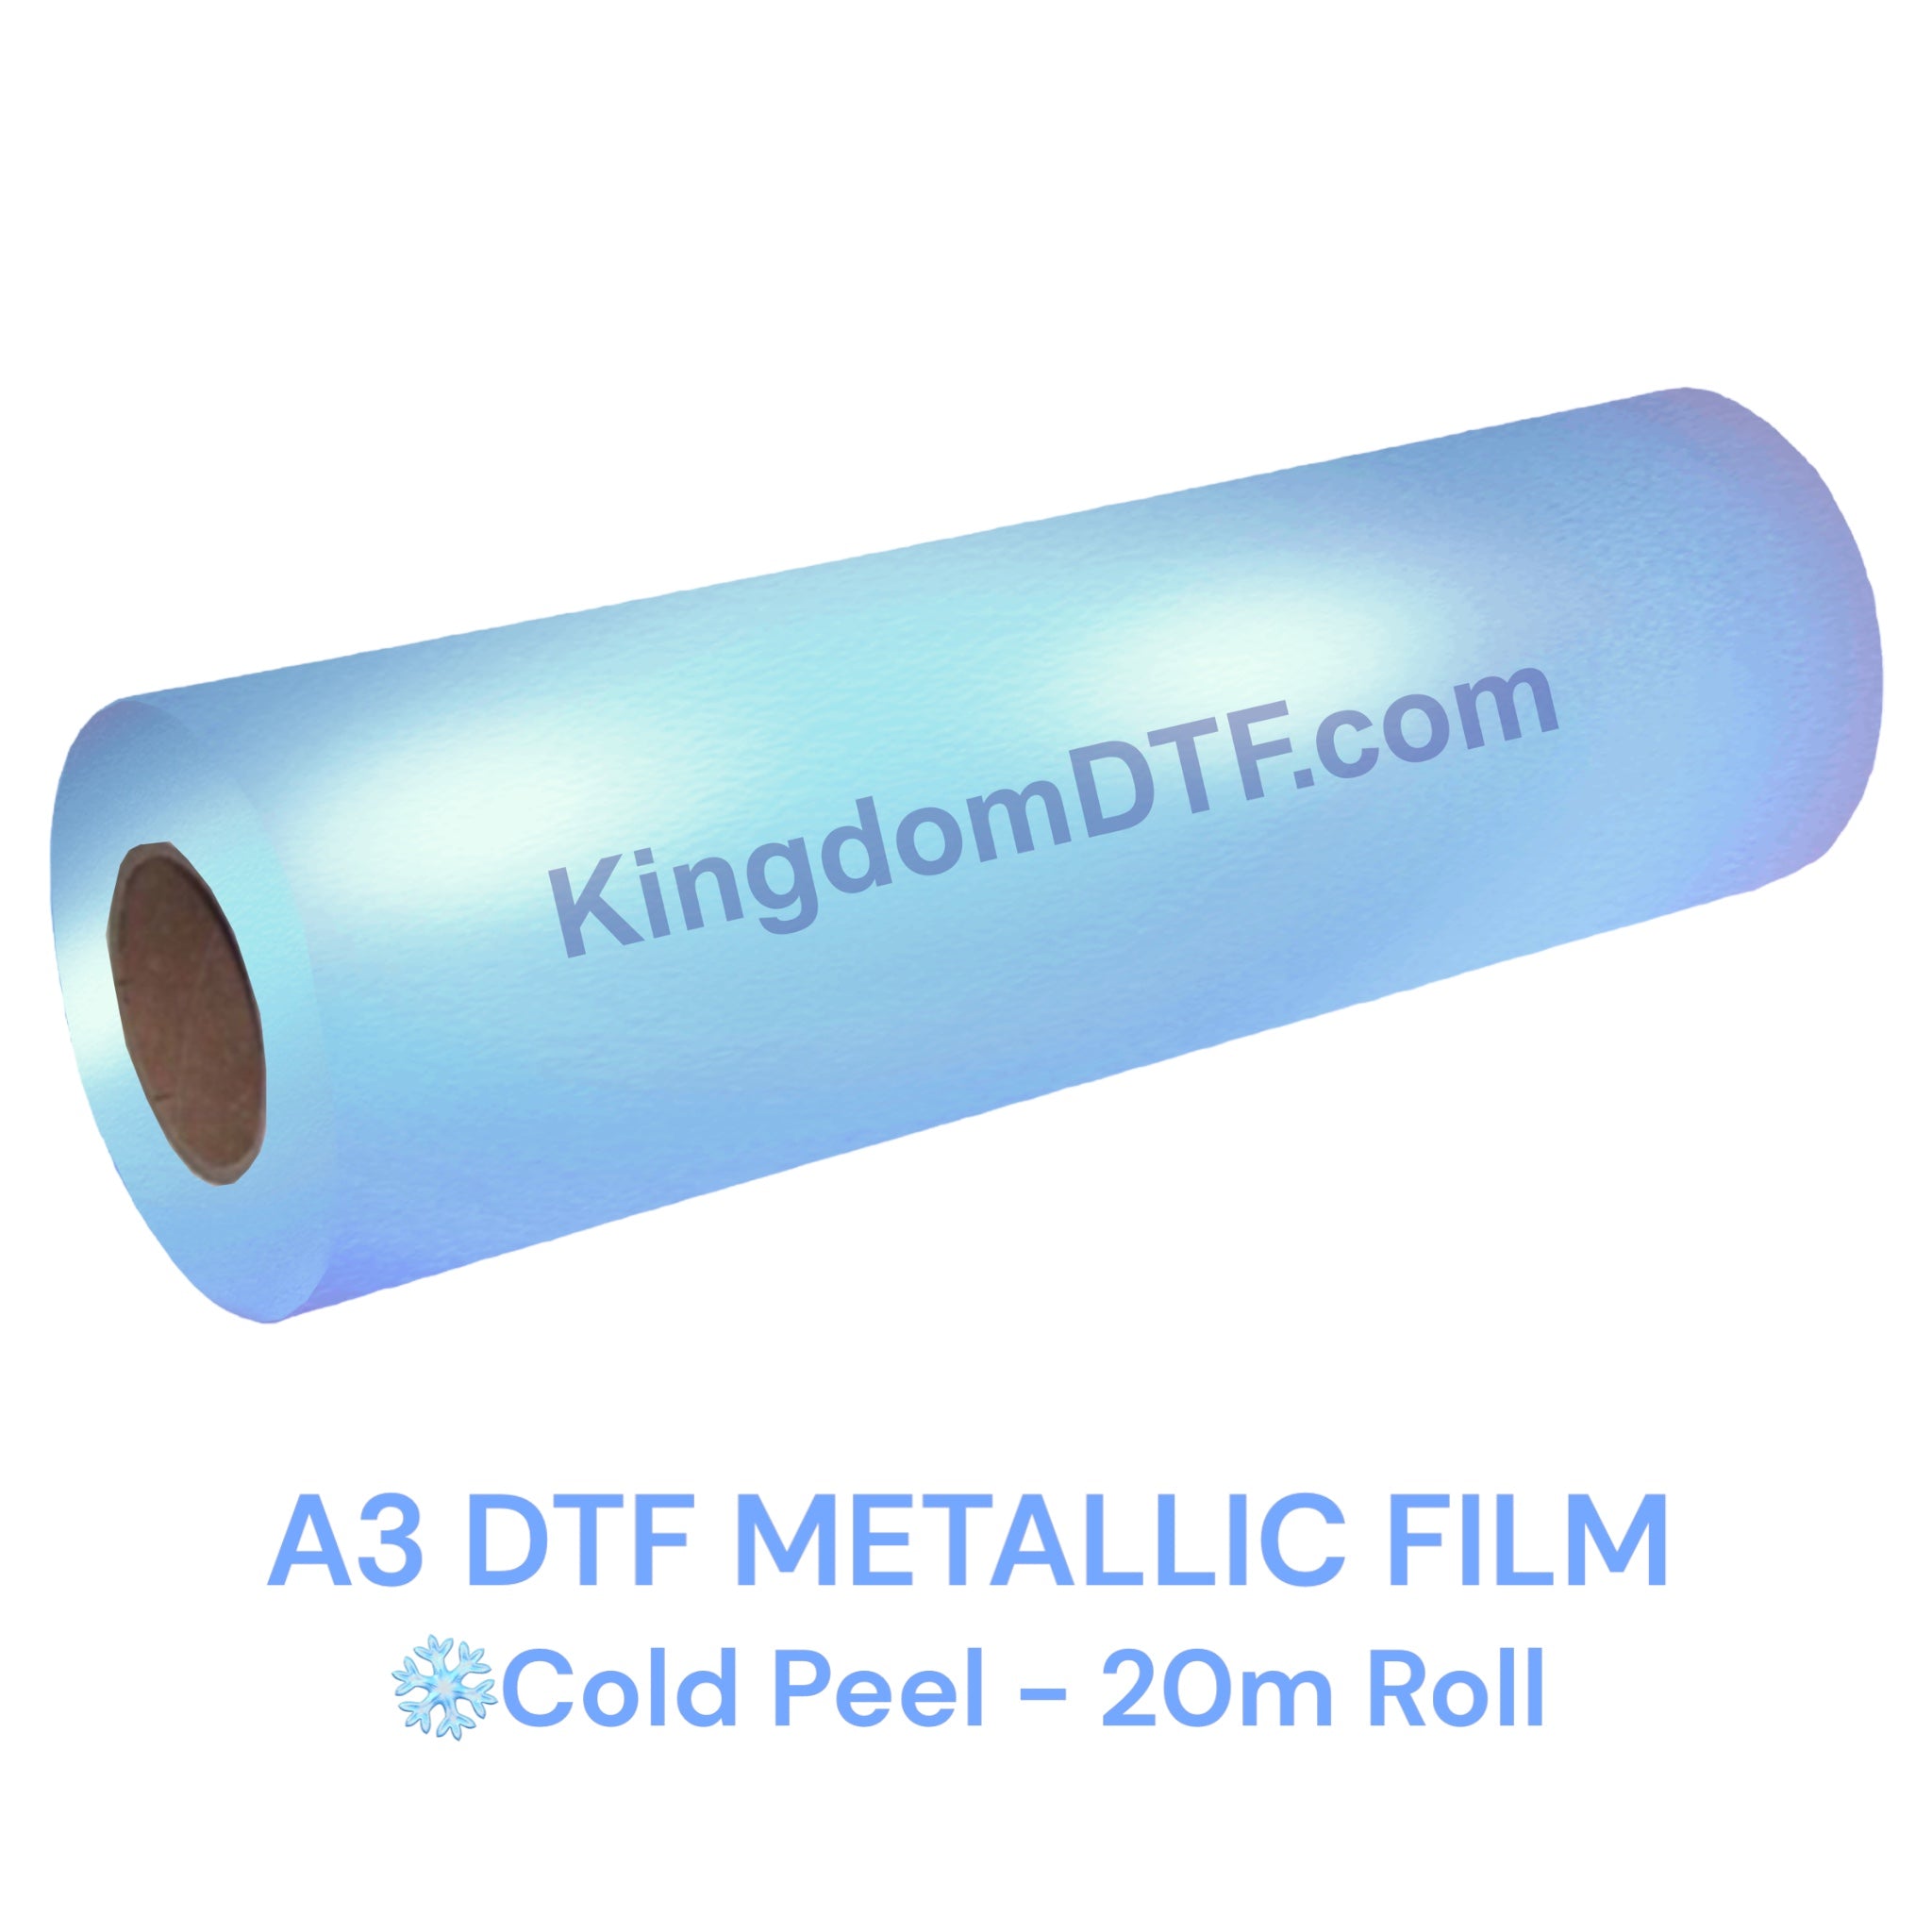 0.5KG Black Magic DTF Powder For Direct Transfer Film Printing For